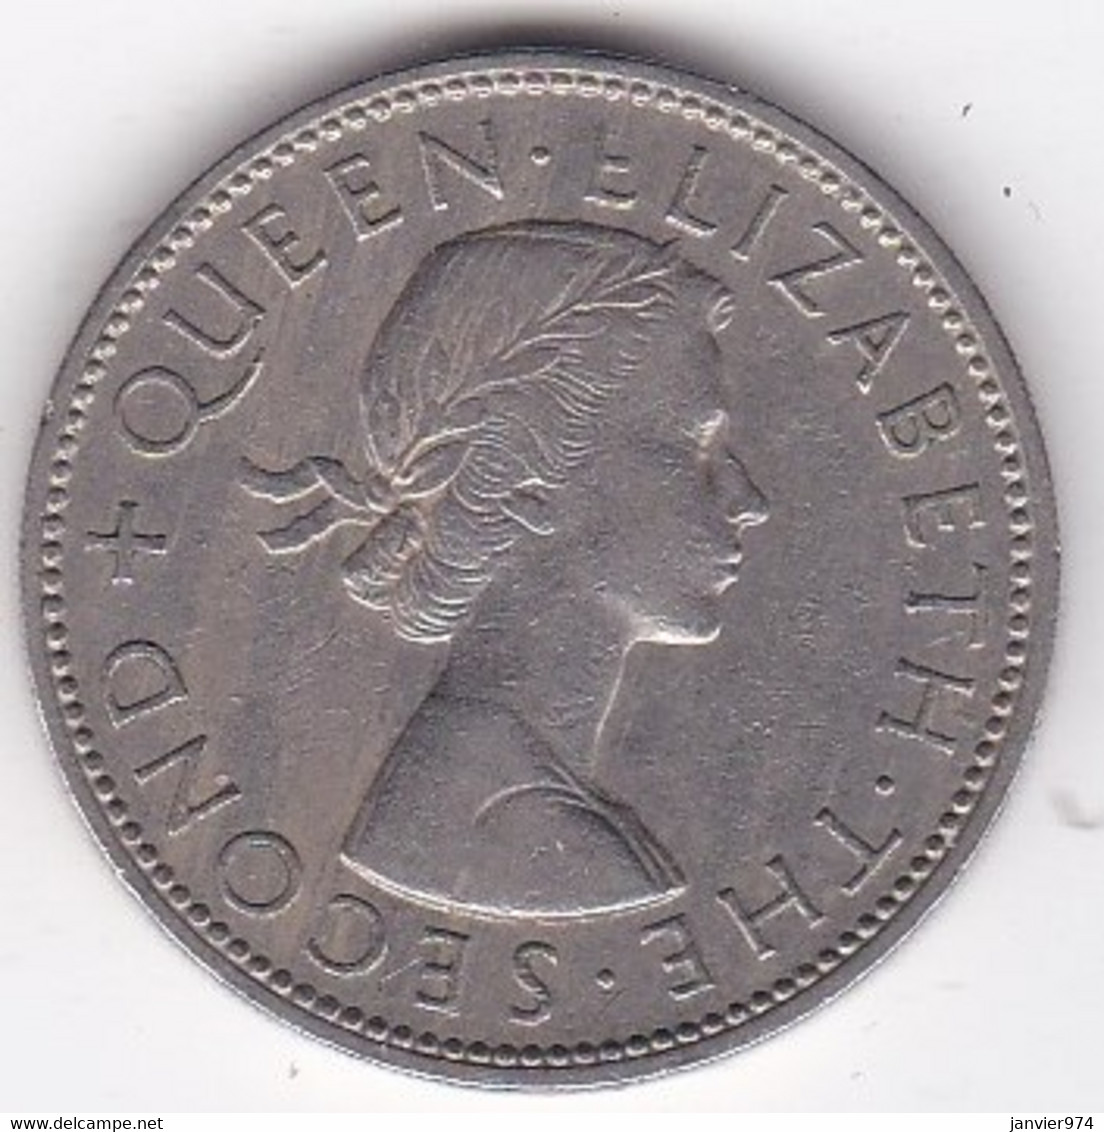 New Zealand. 1 Florin 1962 Elizabeth II. Copper-Nickel. KM# 28.1 - New Zealand